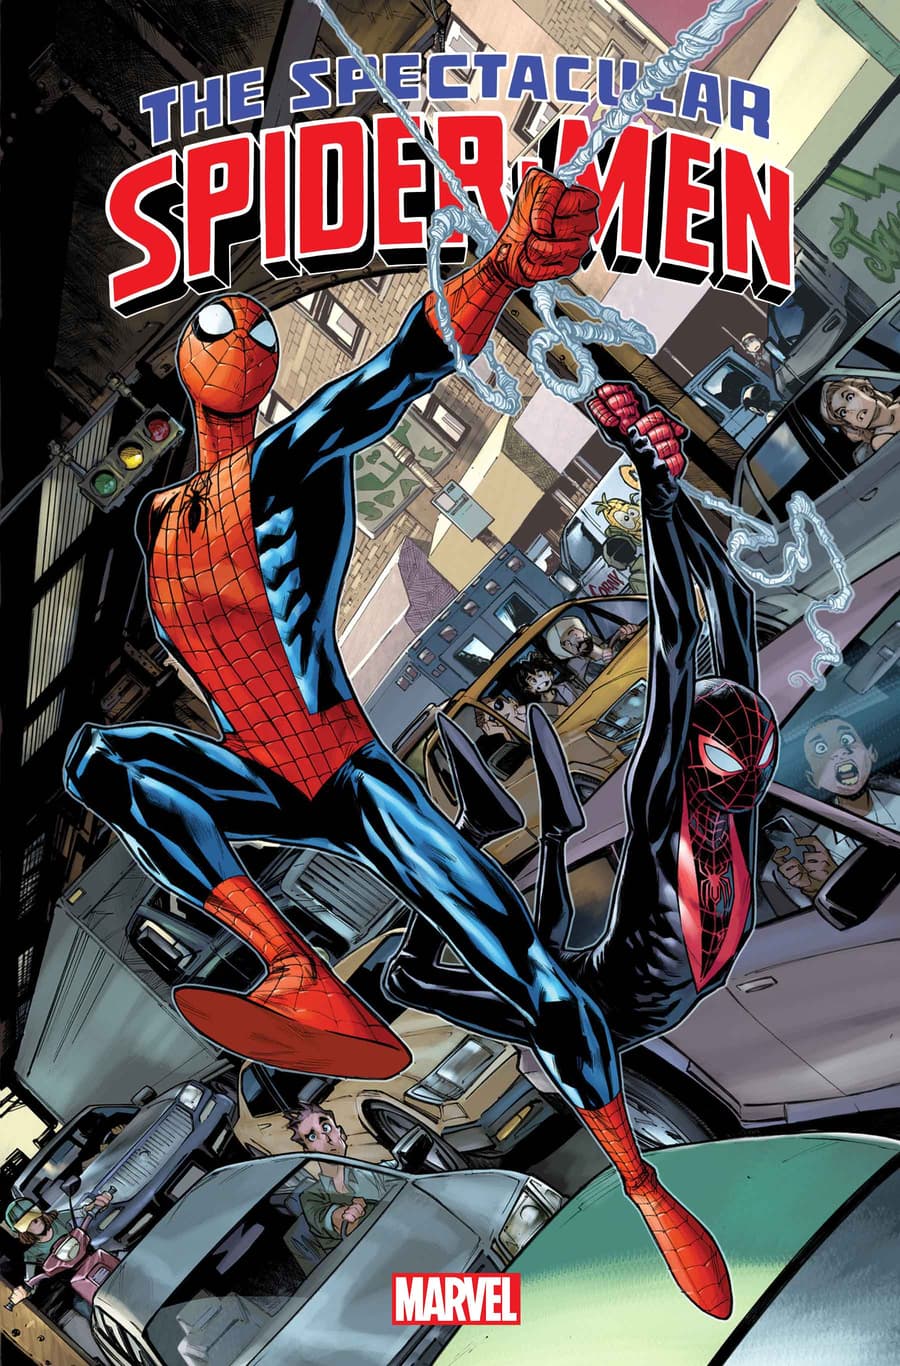 Spectacular Spider-Men #1 cover